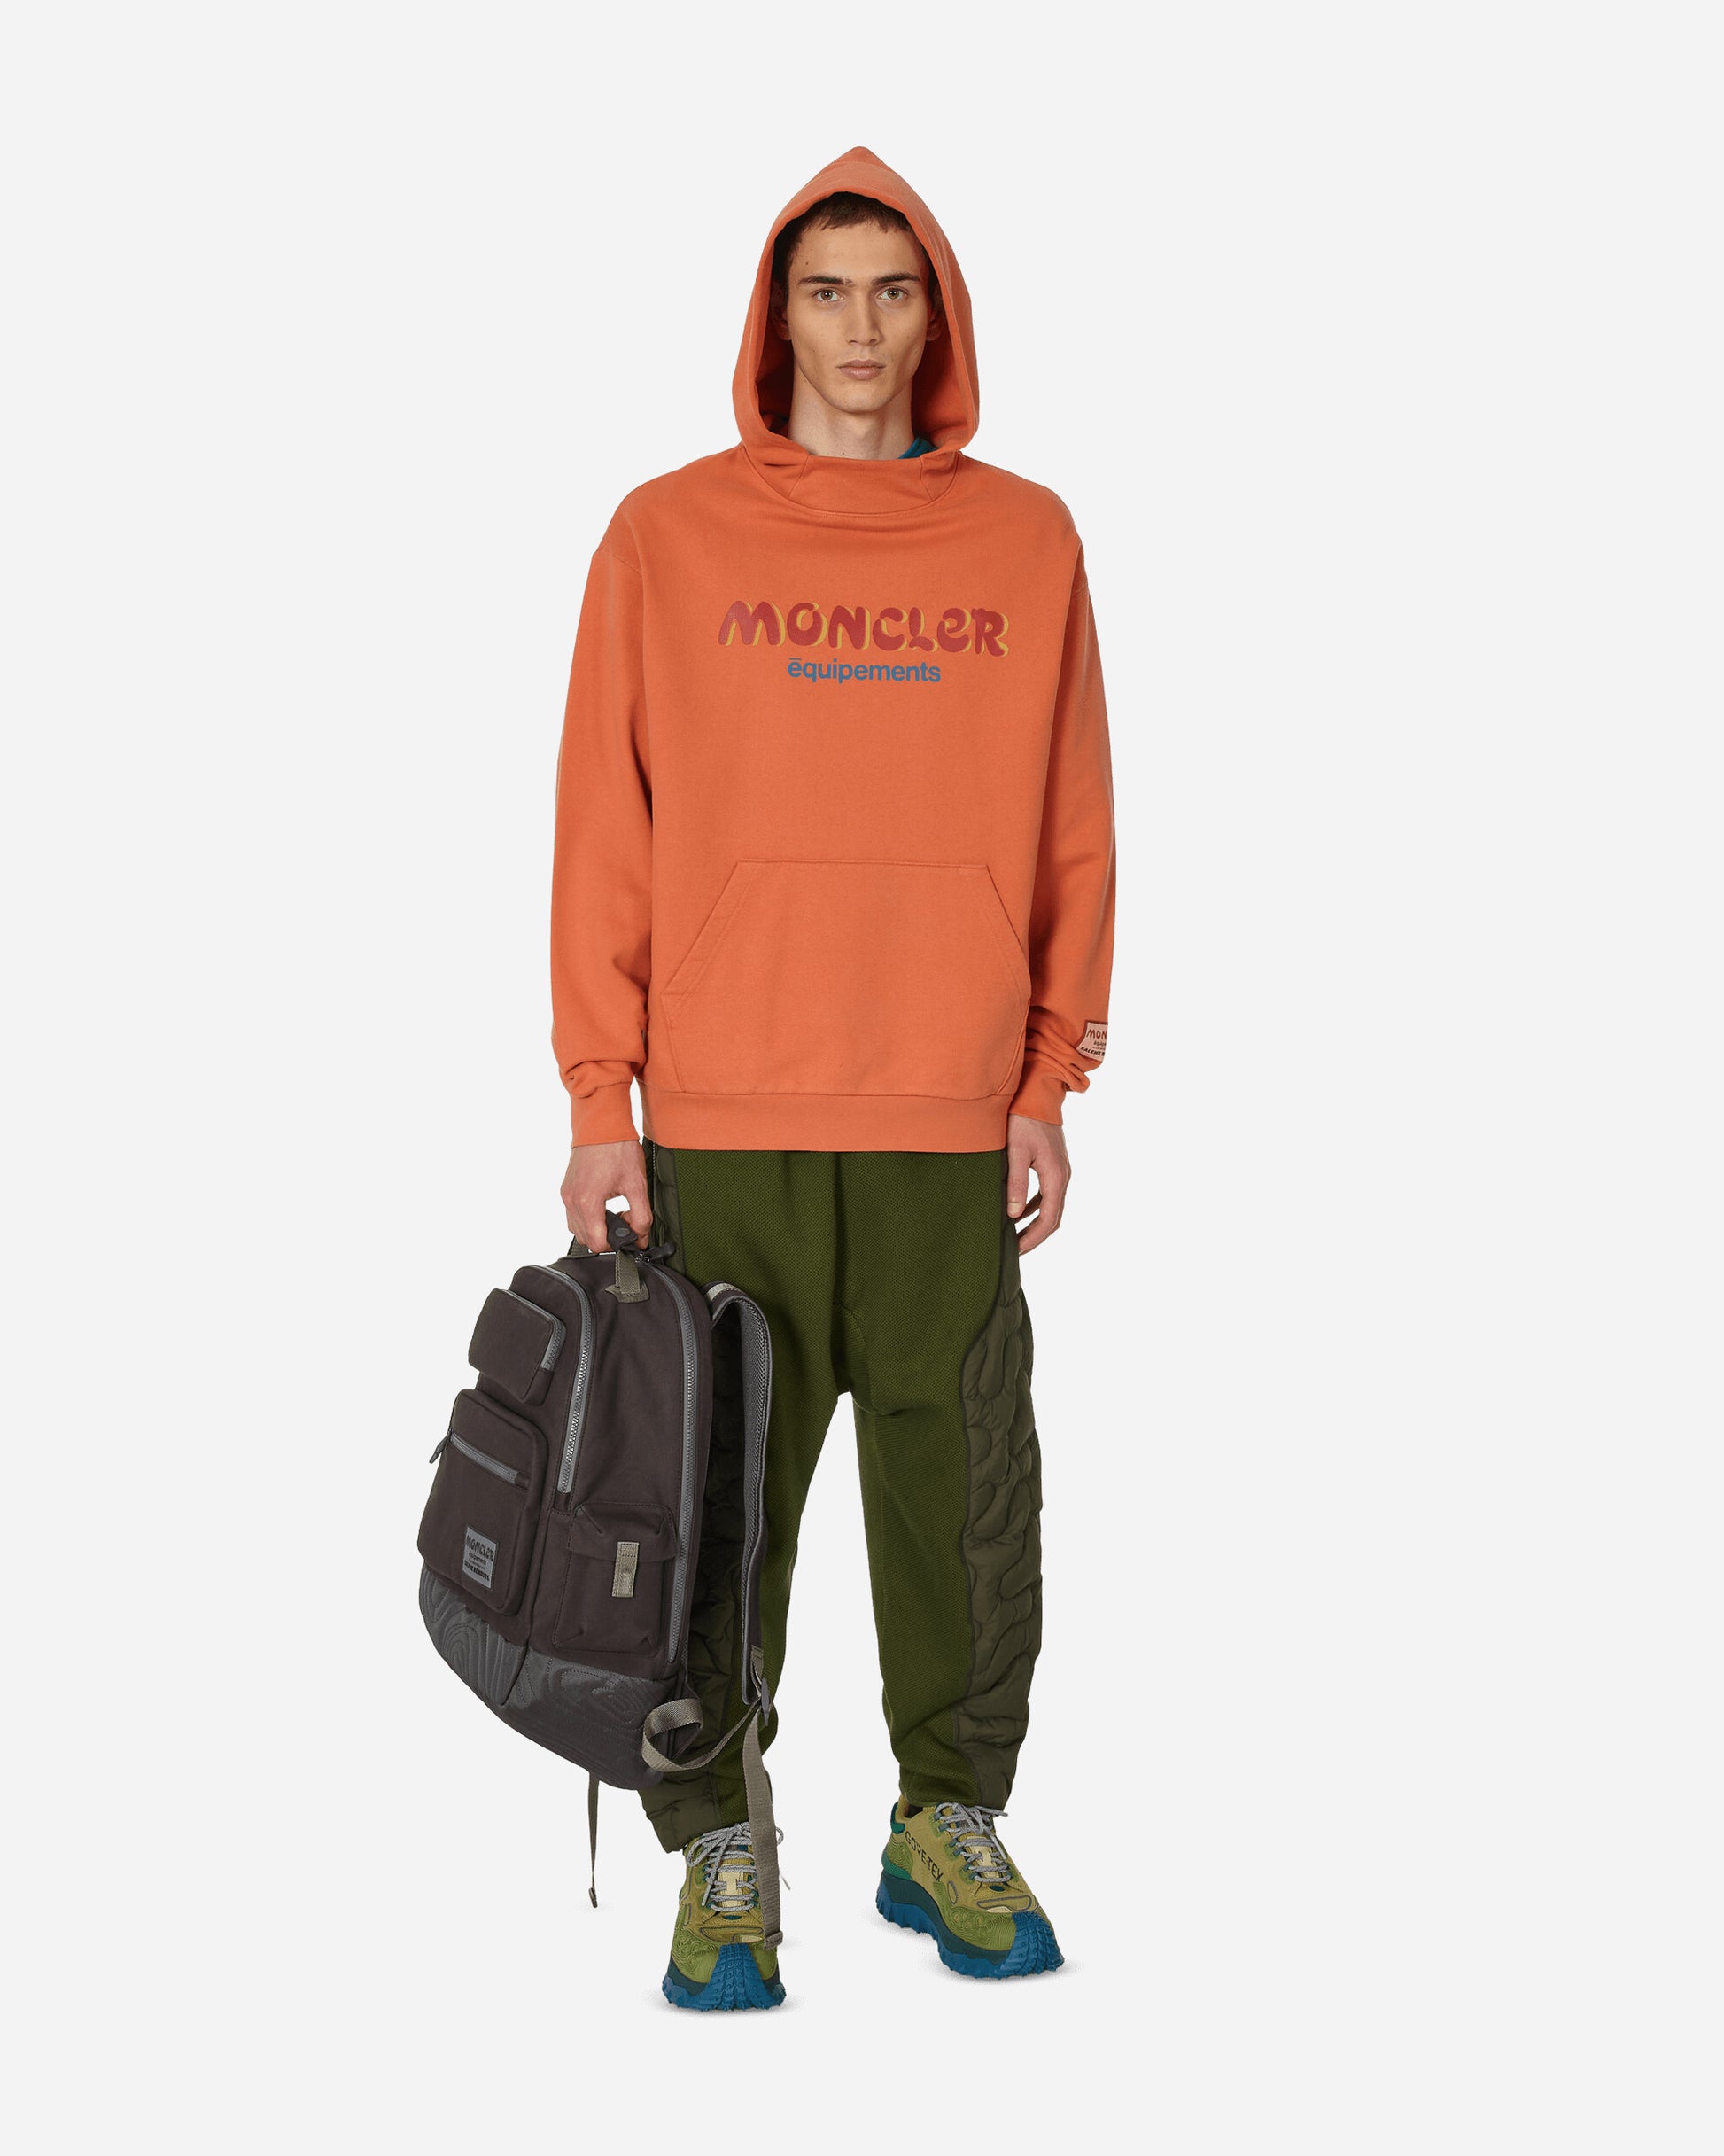 Moncler Genius Hoodie Sweater X Salehe Bembury Orange Sweatshirts Hoodies 8G00002M3237 270